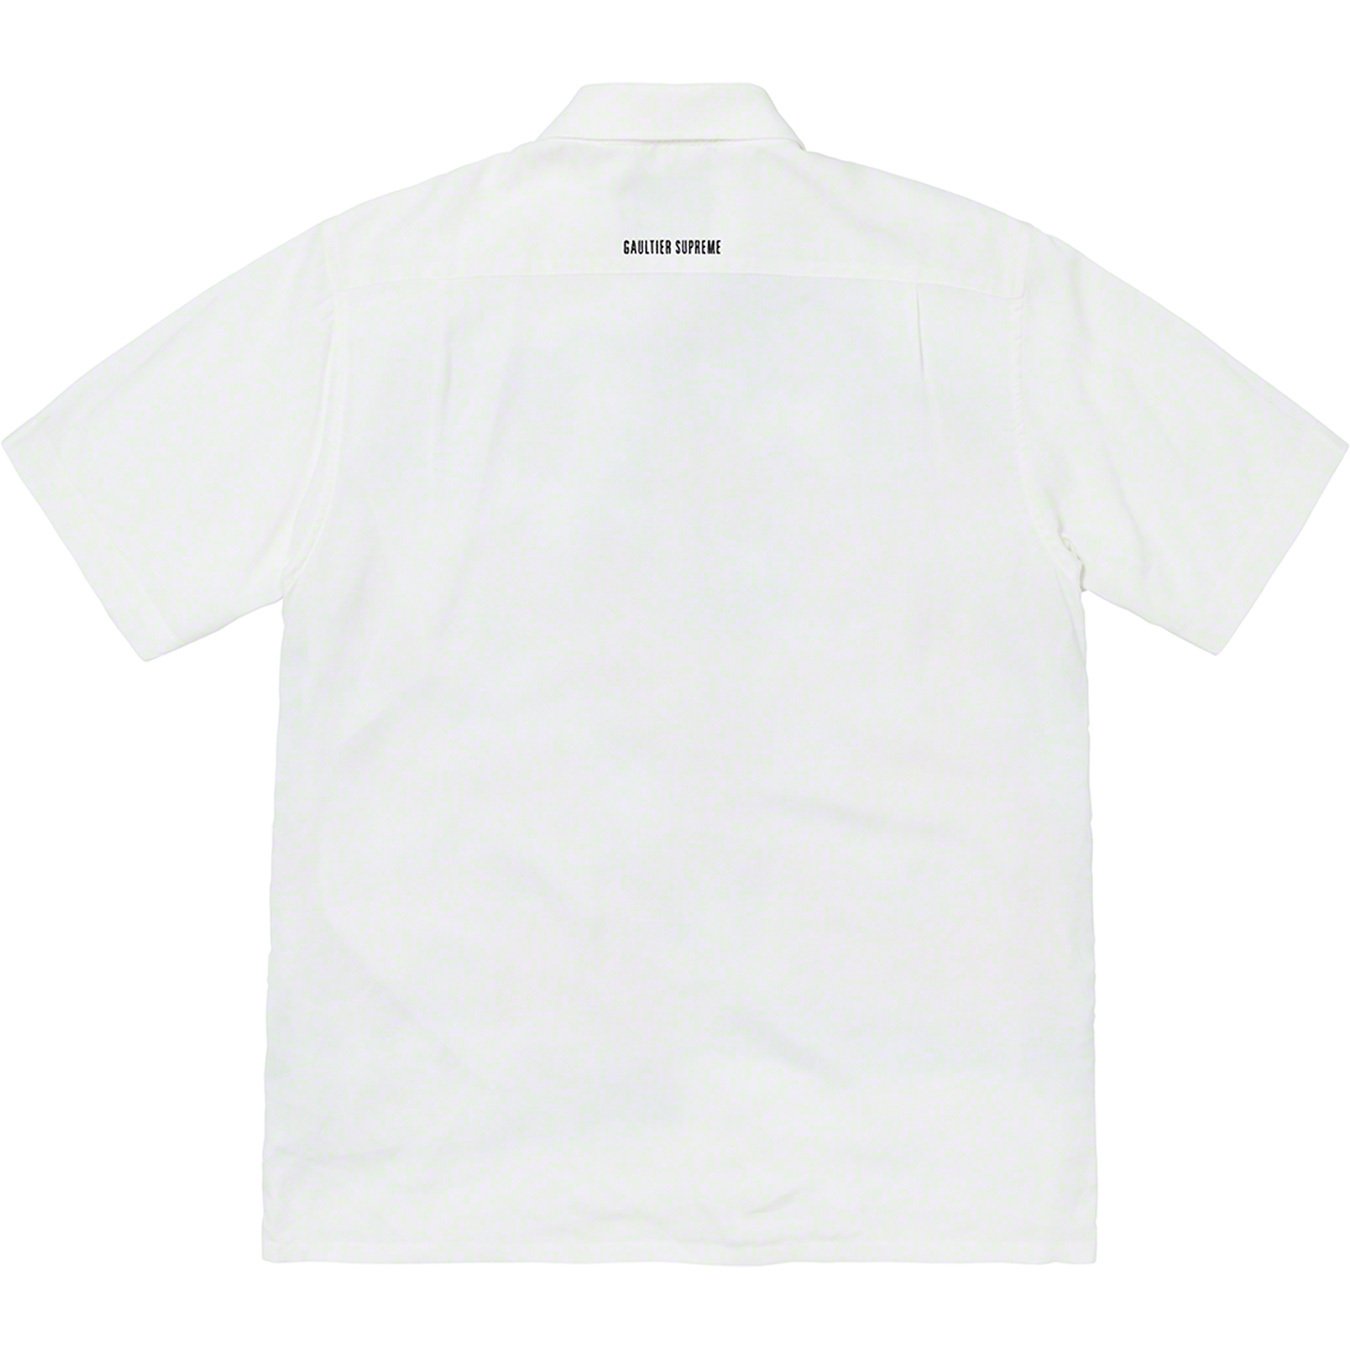 Supreme®/Jean Paul Gaultier® Flower Power Rayon Shirt - Supreme 